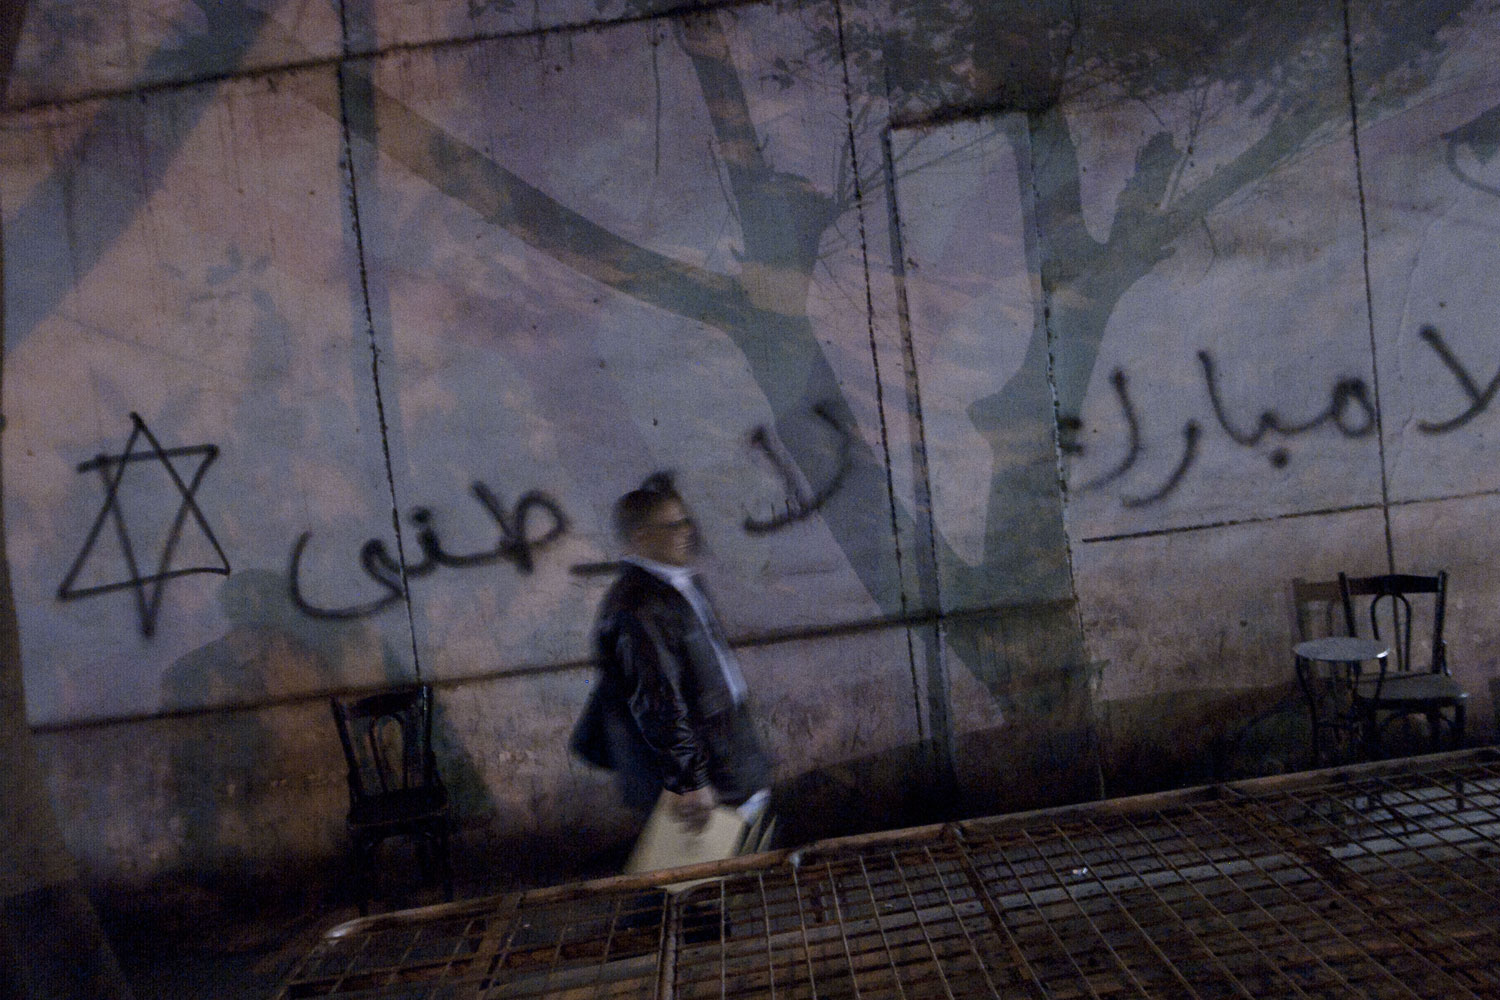 Graffiti in Tahrir Square